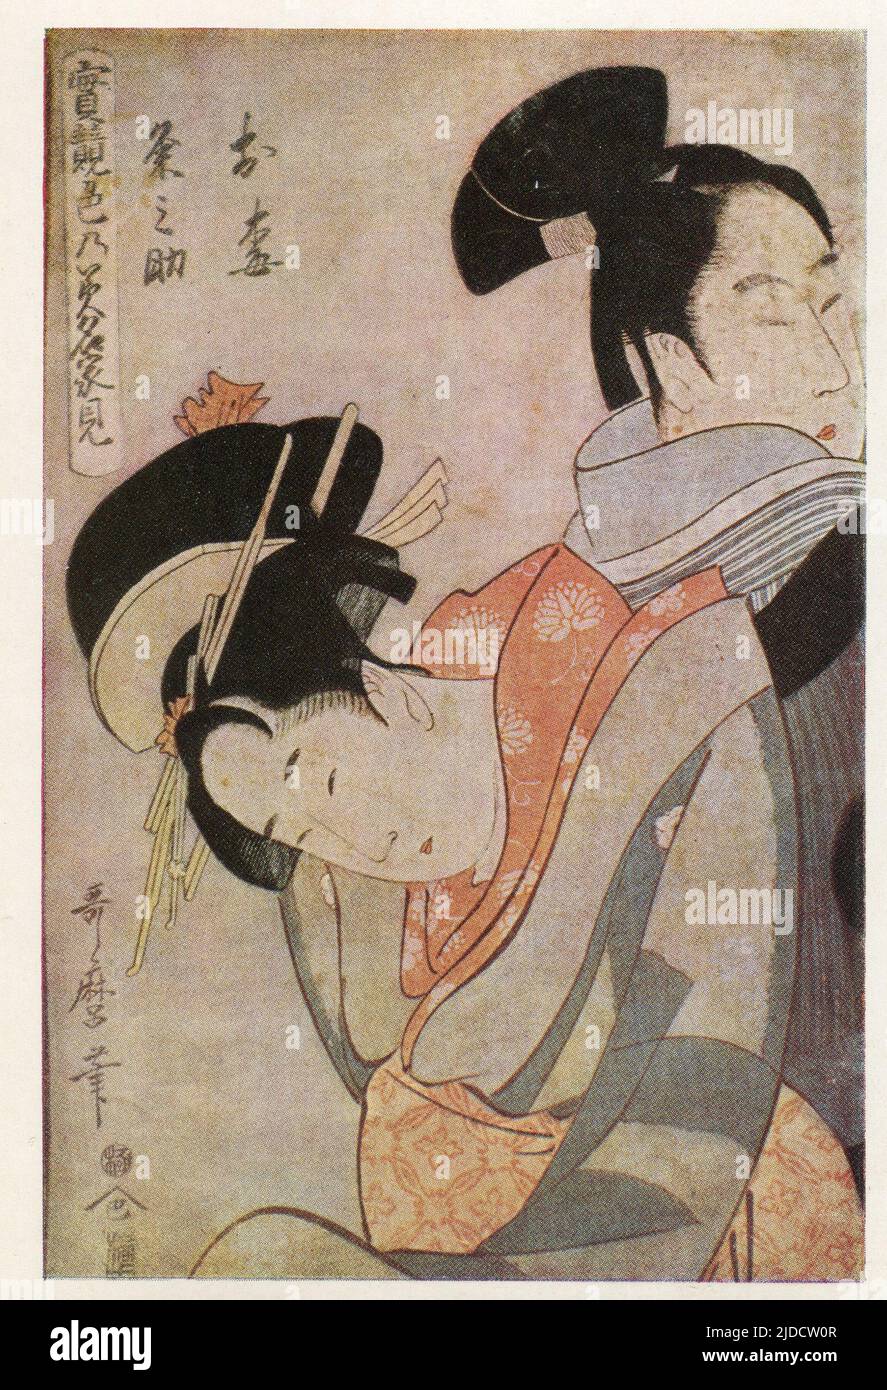 Kitagawa Utamaro (Japanese: 喜多川 歌麿; c. 1753 – 31 October 1806) was a Japanese artist. Old Vintage postcard of the USSR, 1958. Stock Photo